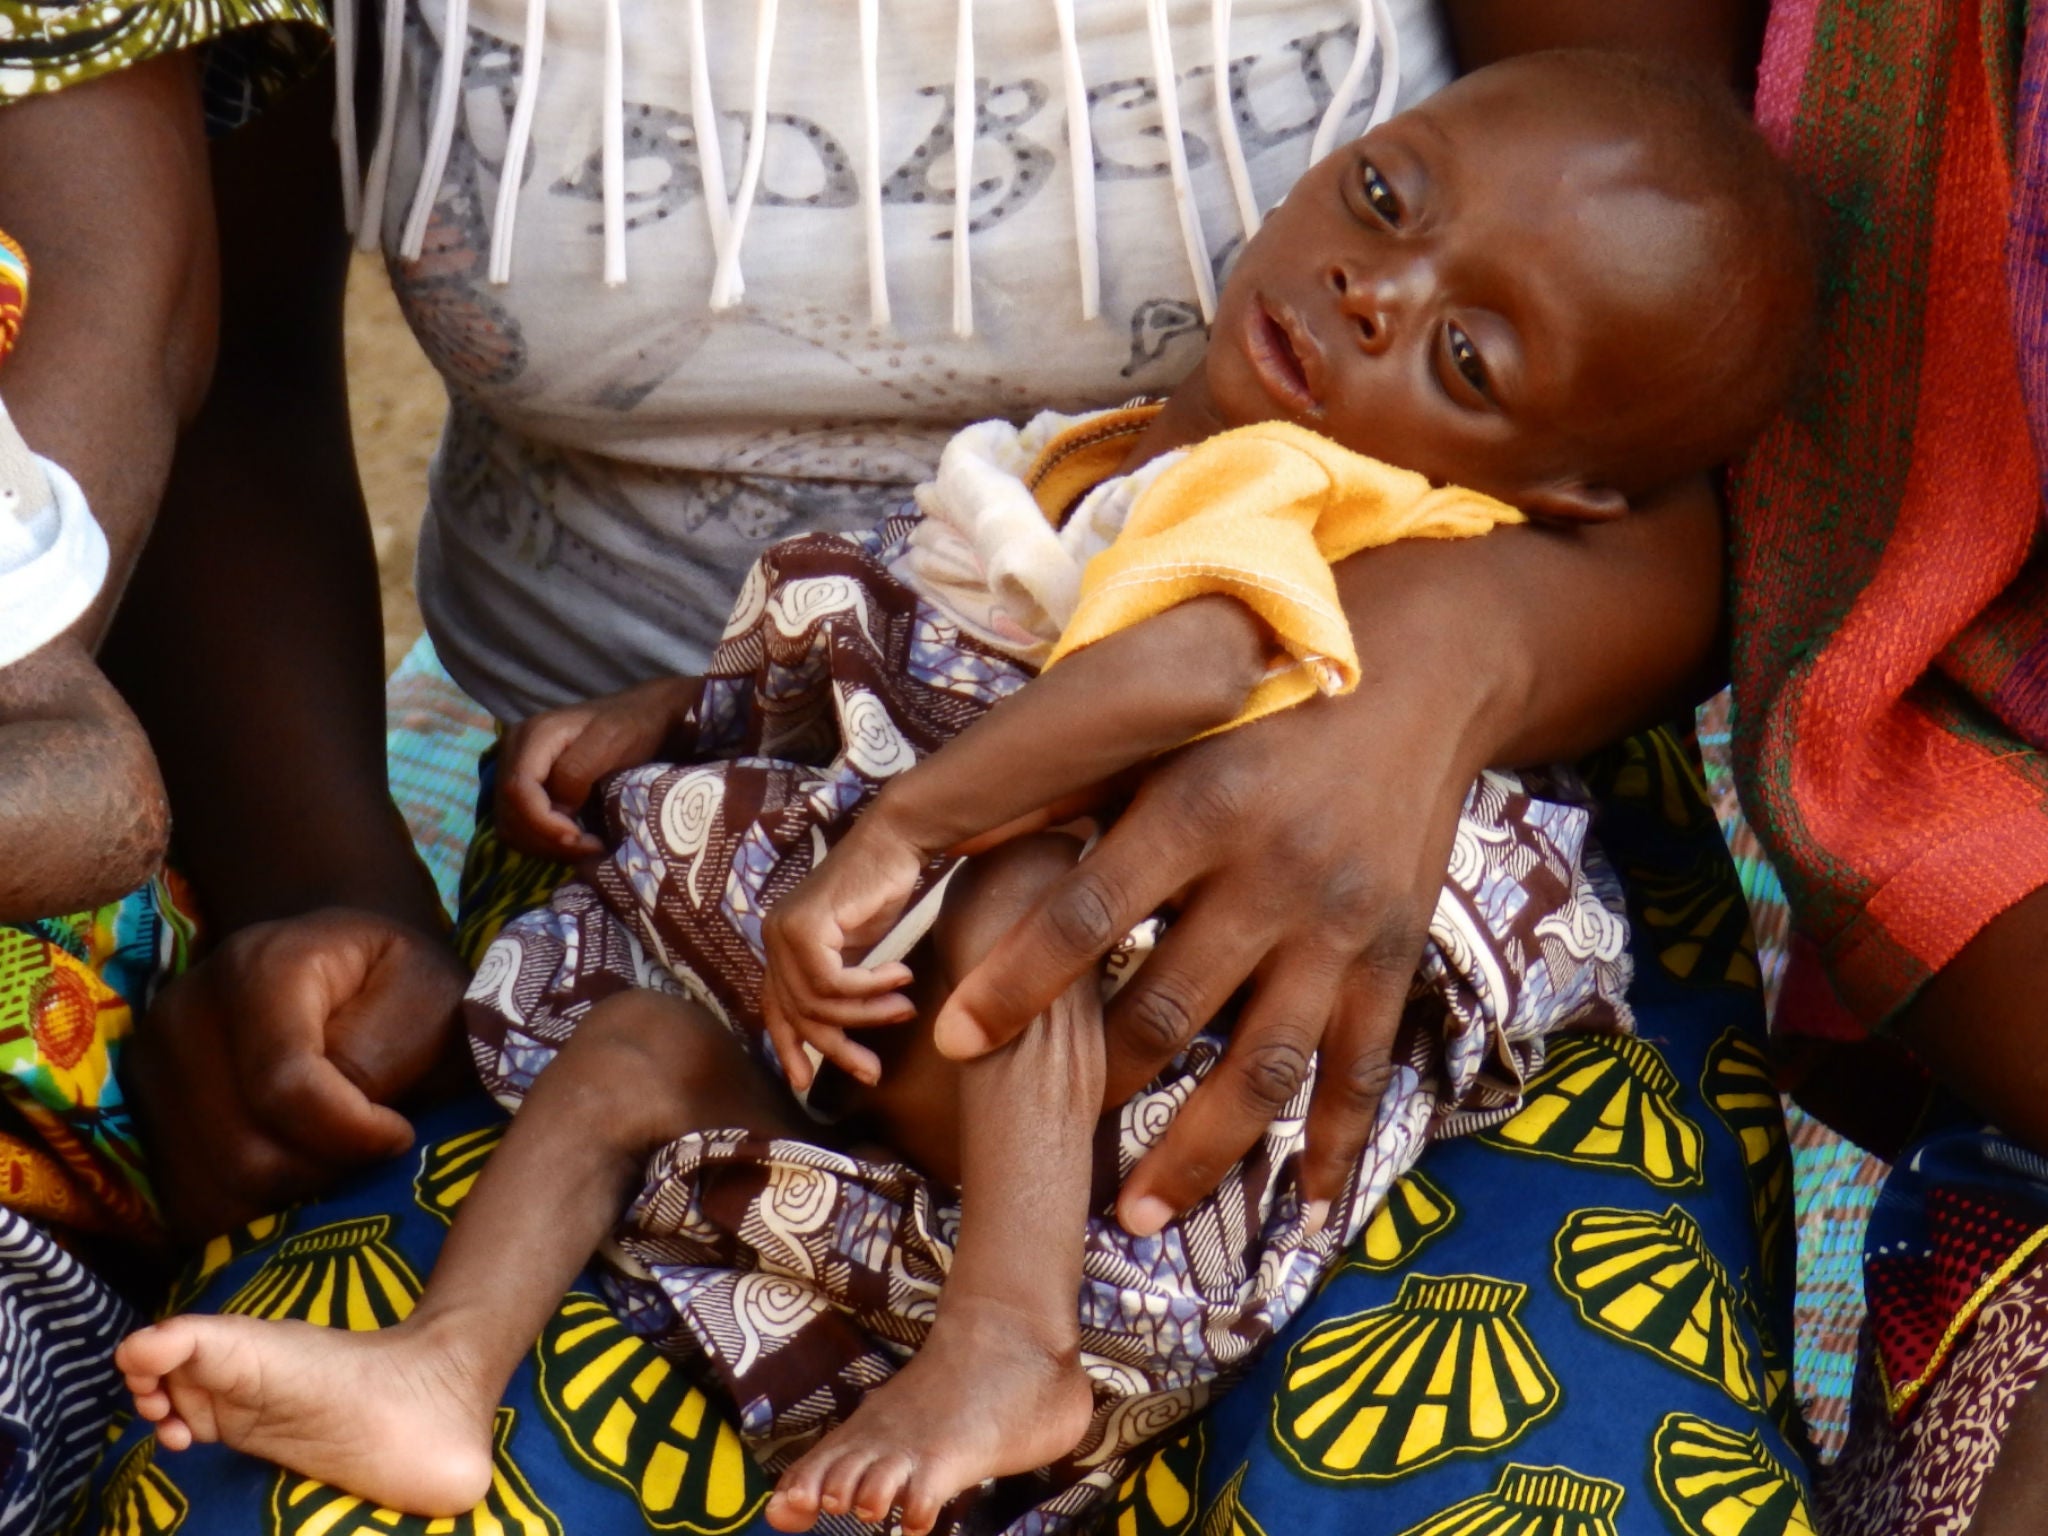 A child undergoing treatment for severe acute malnutrition at Kita Hospital, Kita, Mali on 14 March 2016